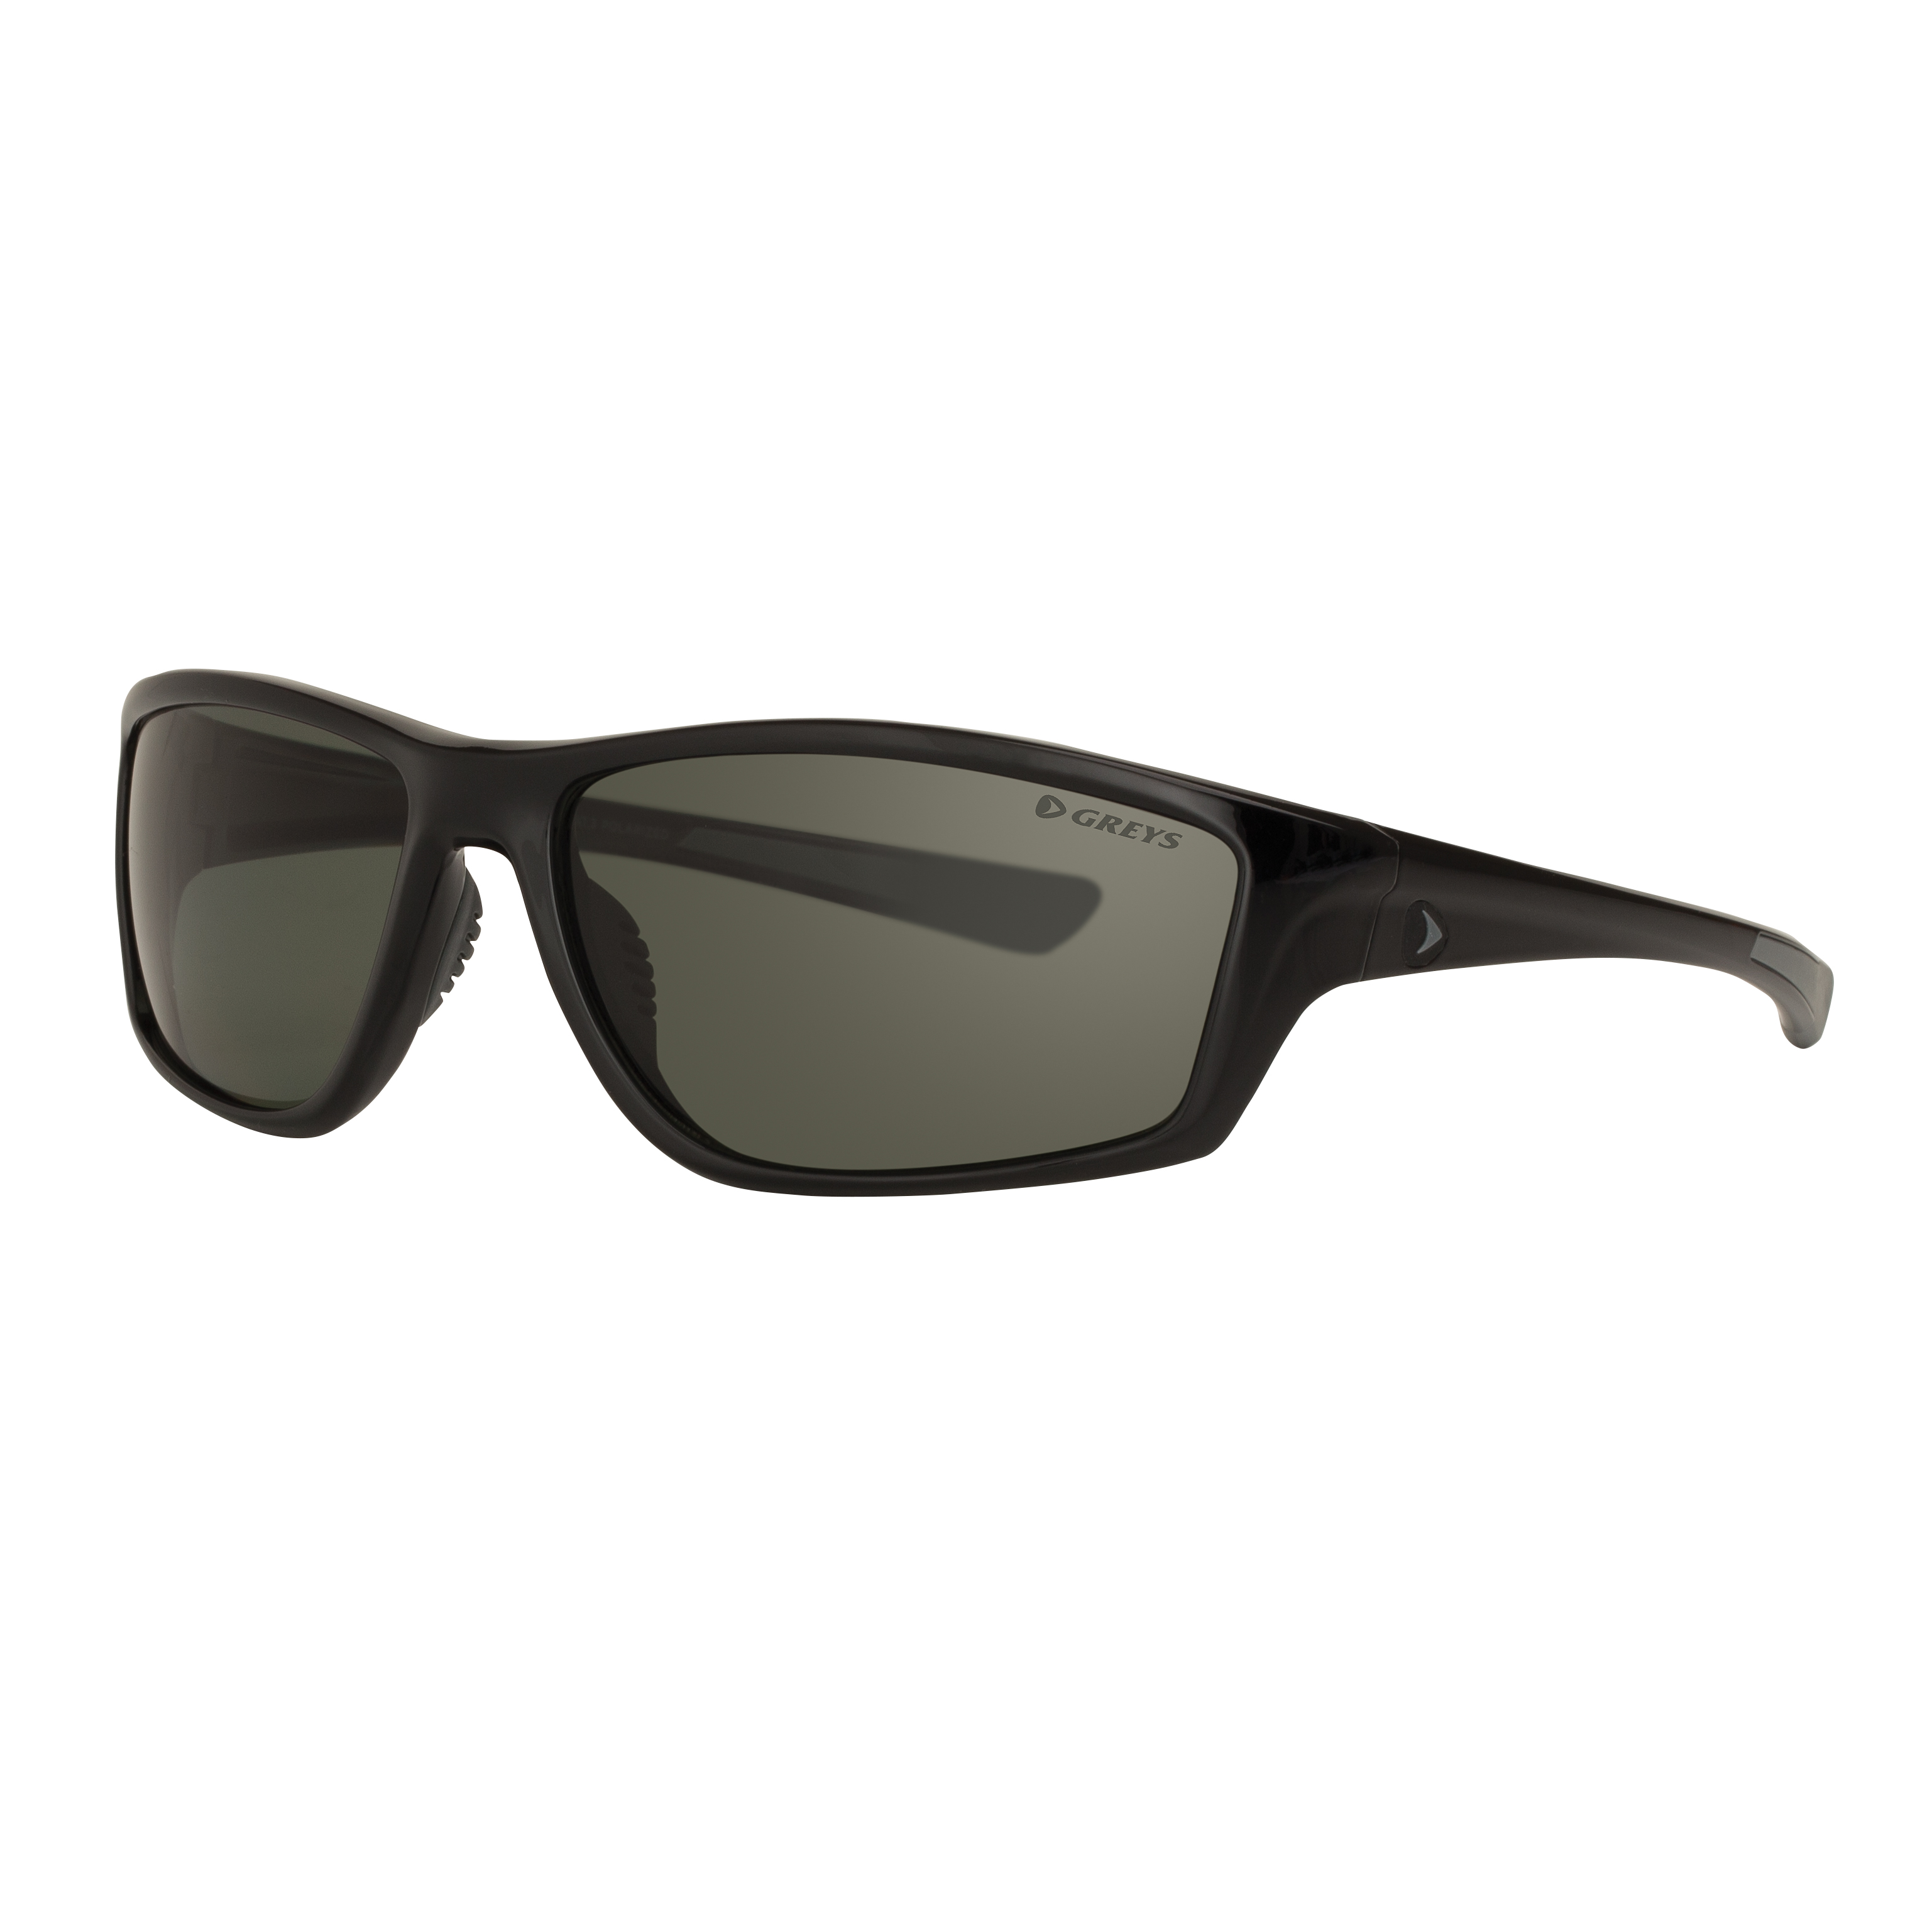 Greys G3 Sunglasses Gloss Black/Green/Grey – Glasgow Angling Centre